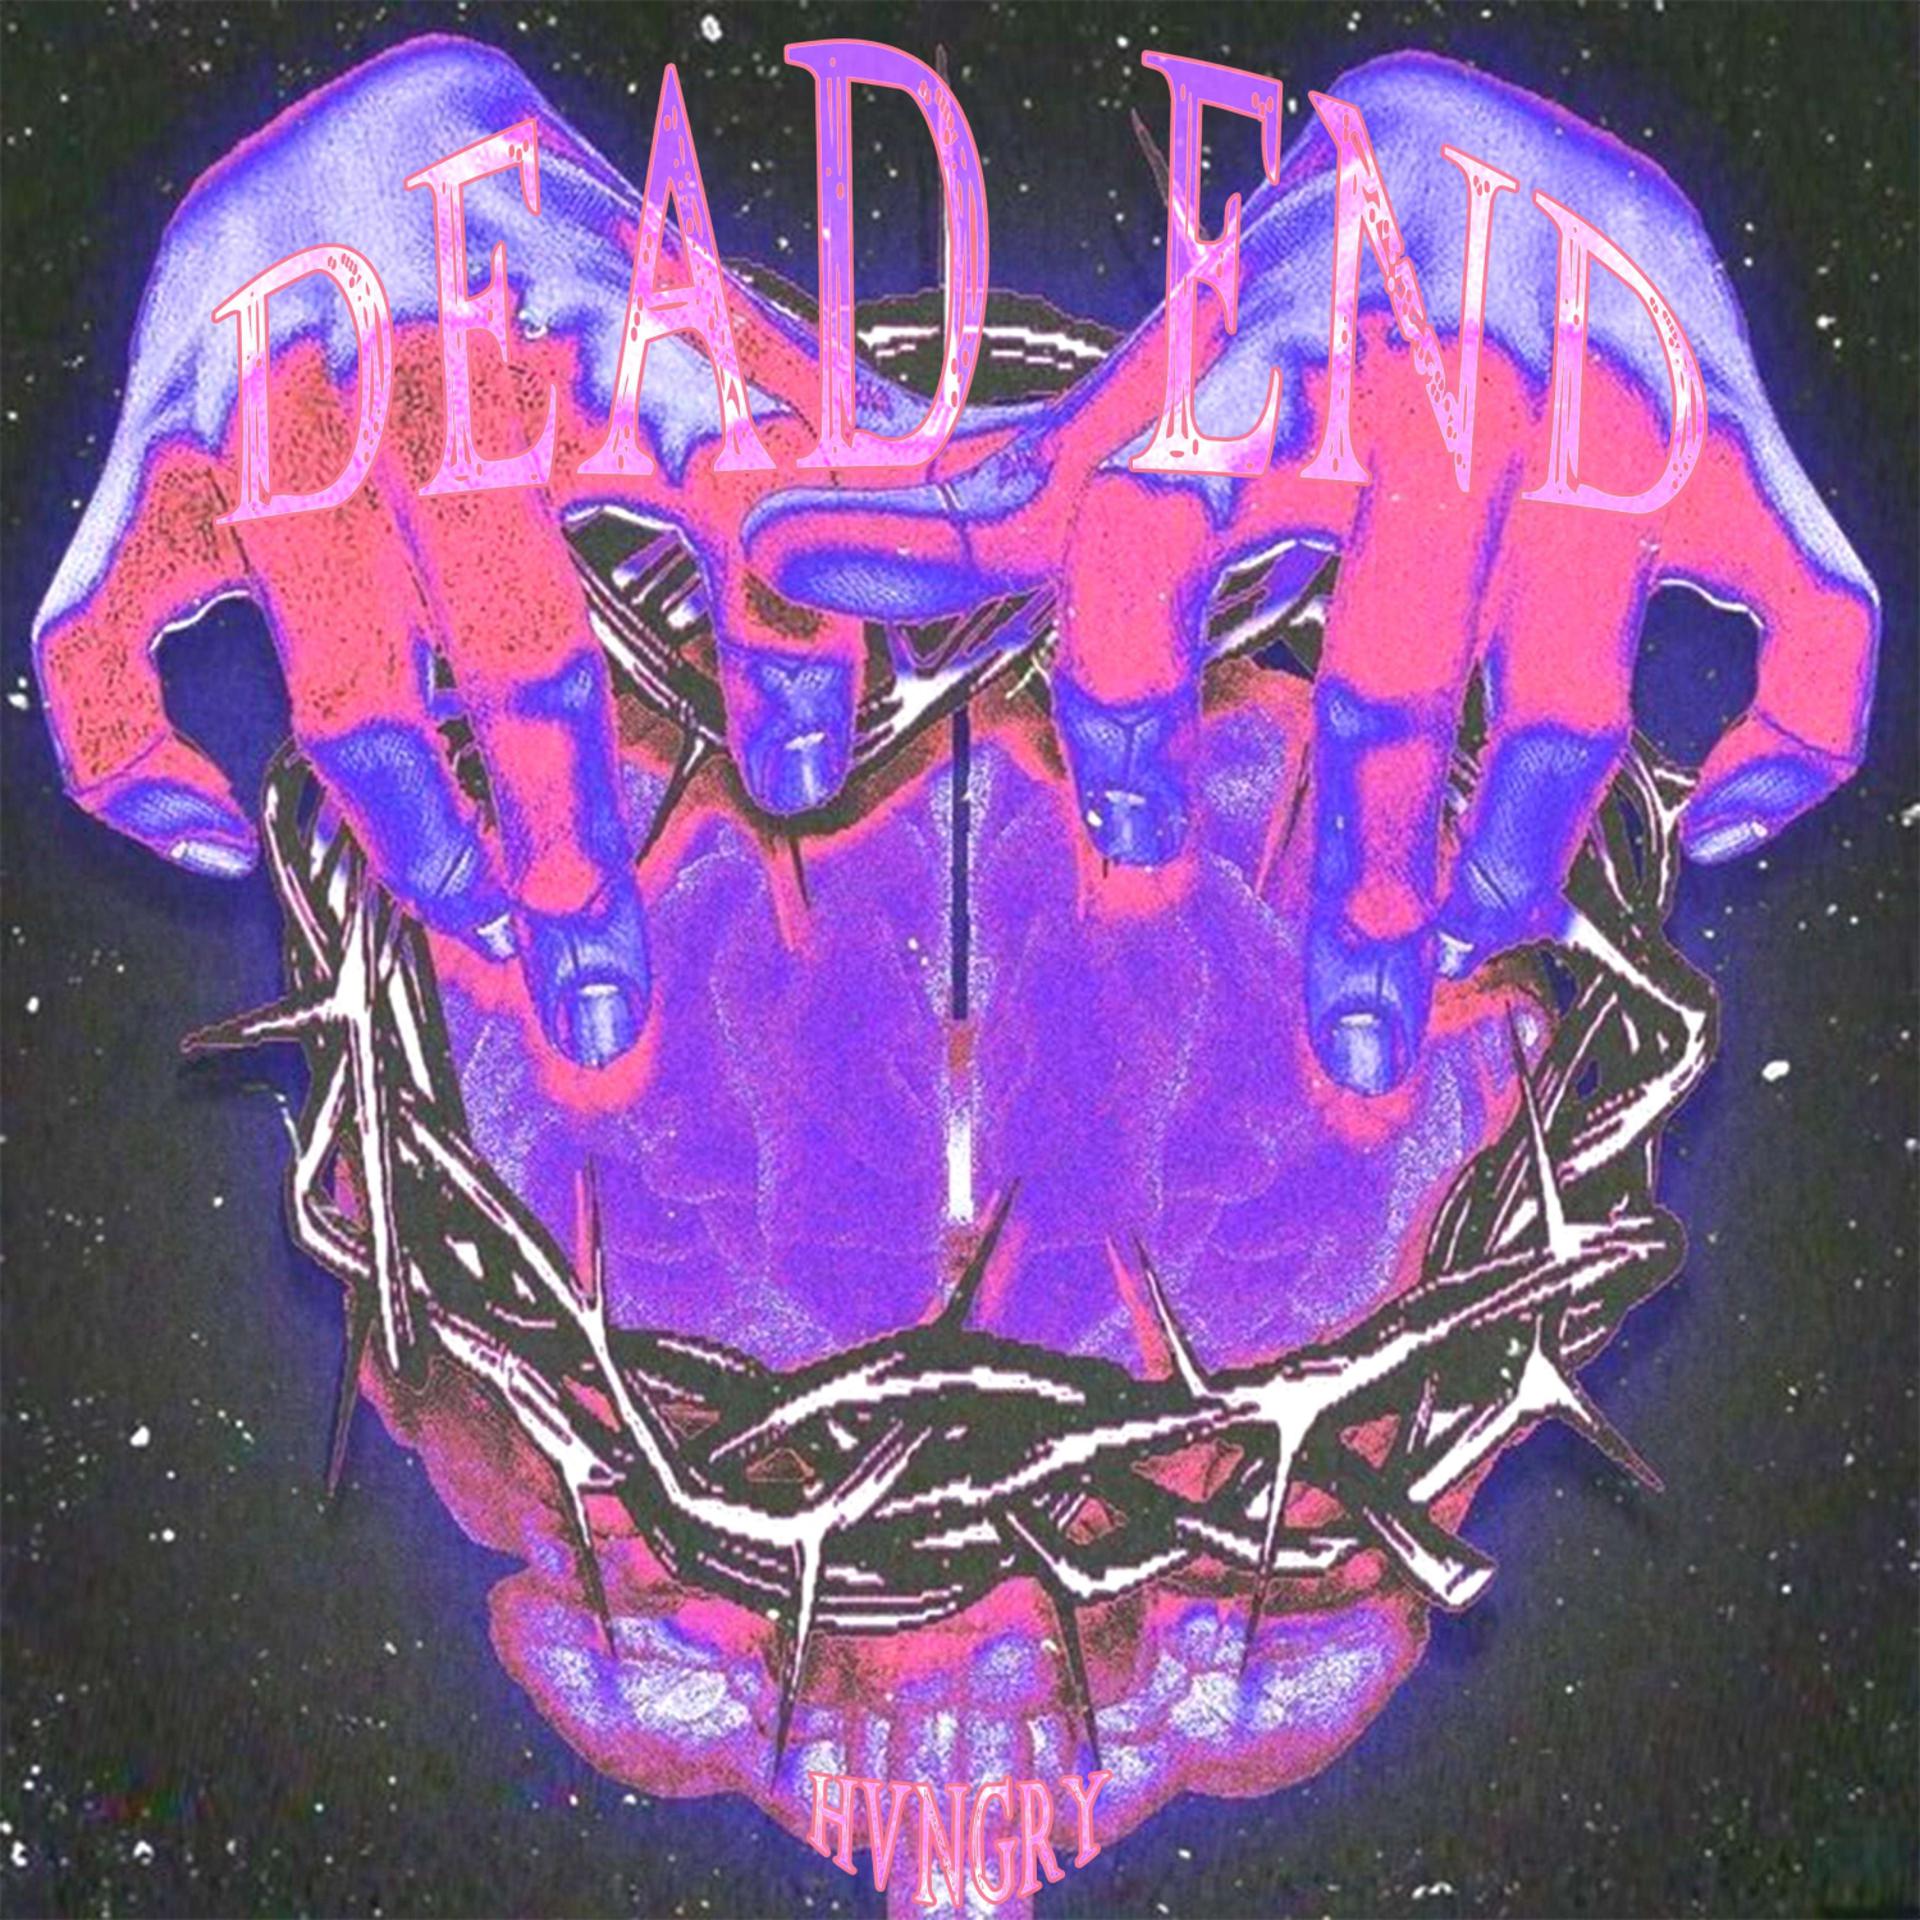 Постер альбома DEAD END